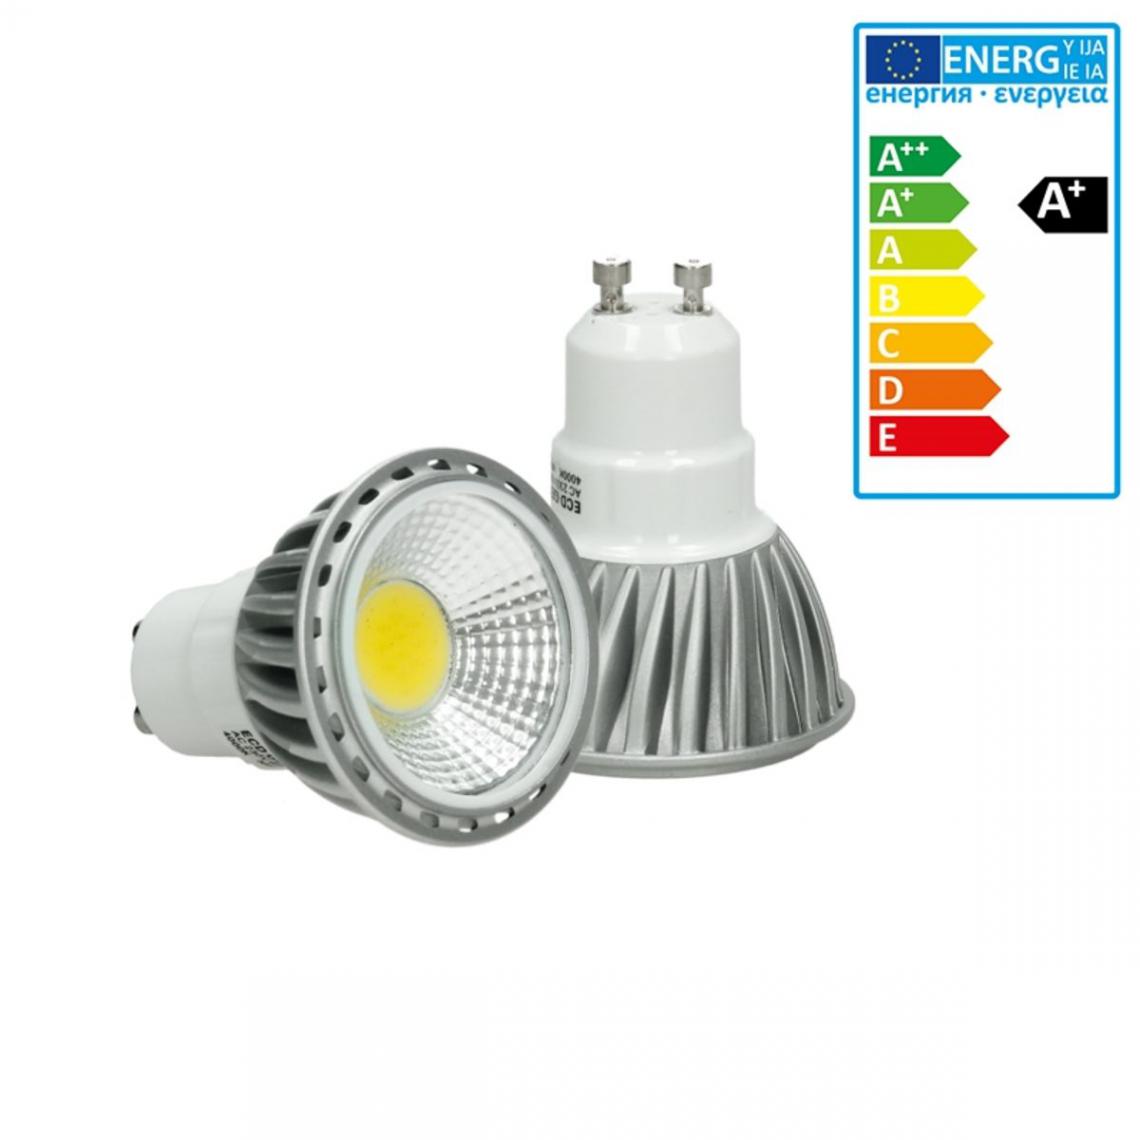 Ecd Germany - ECD Germany LED COB GU10 Spot Lampe Ampoule Blanc Chaud 6W Dimmable - Ampoules LED